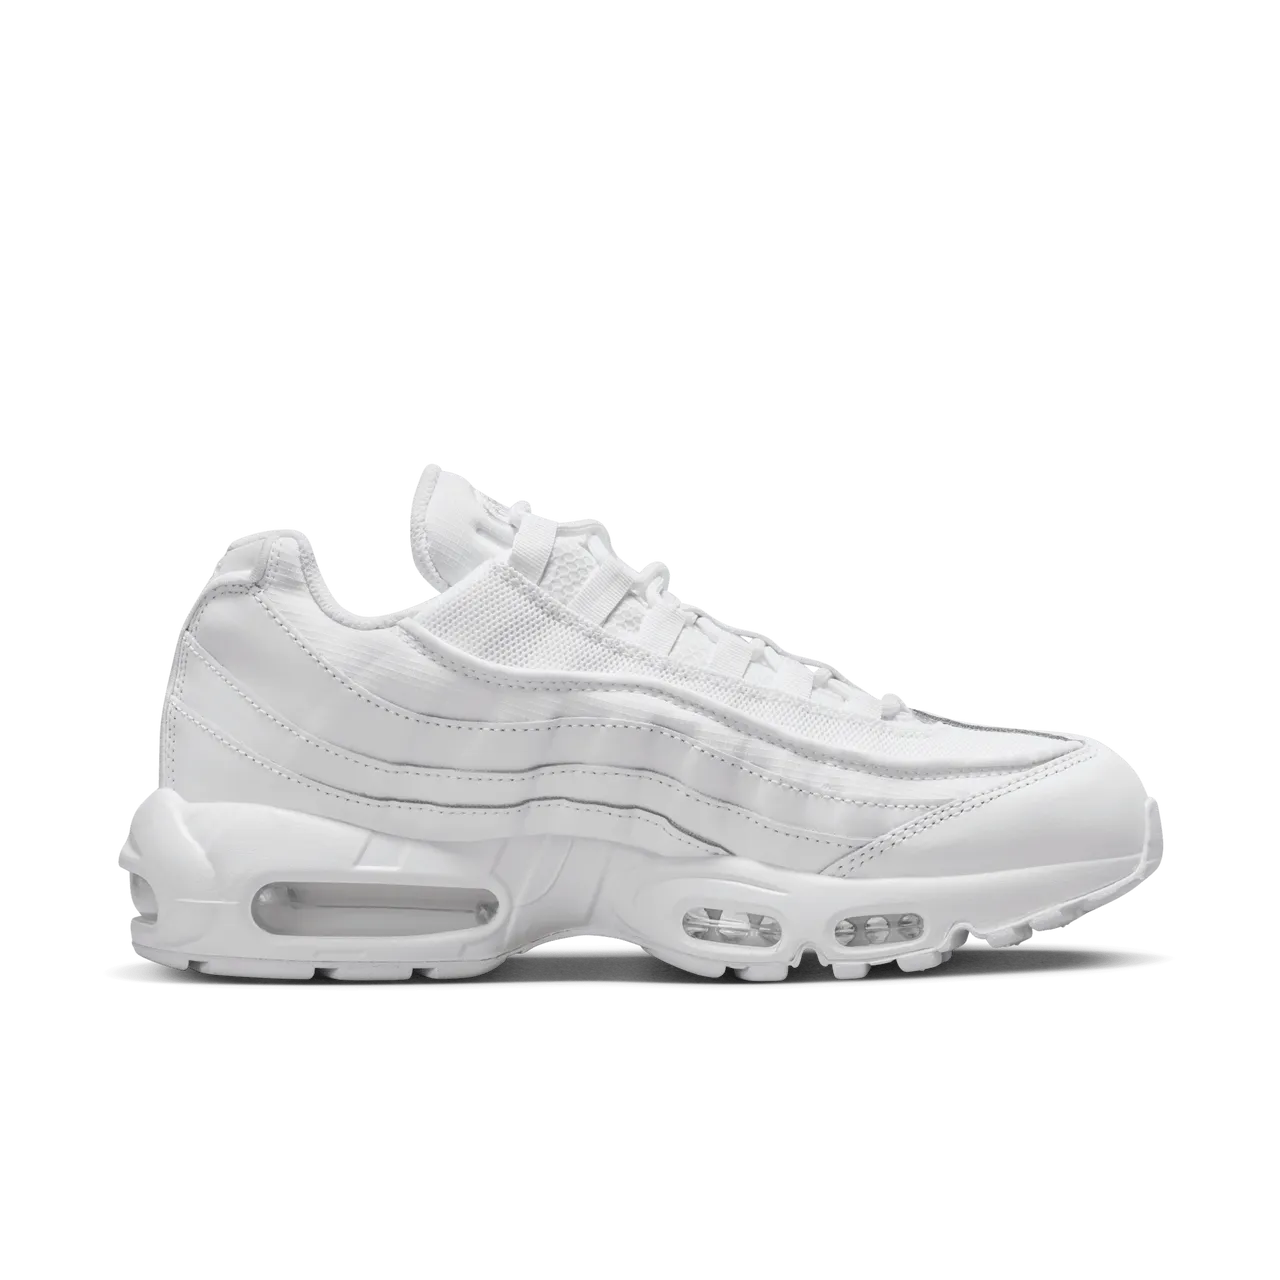 Nike Air Max 95 Essential Men's Shoe - White